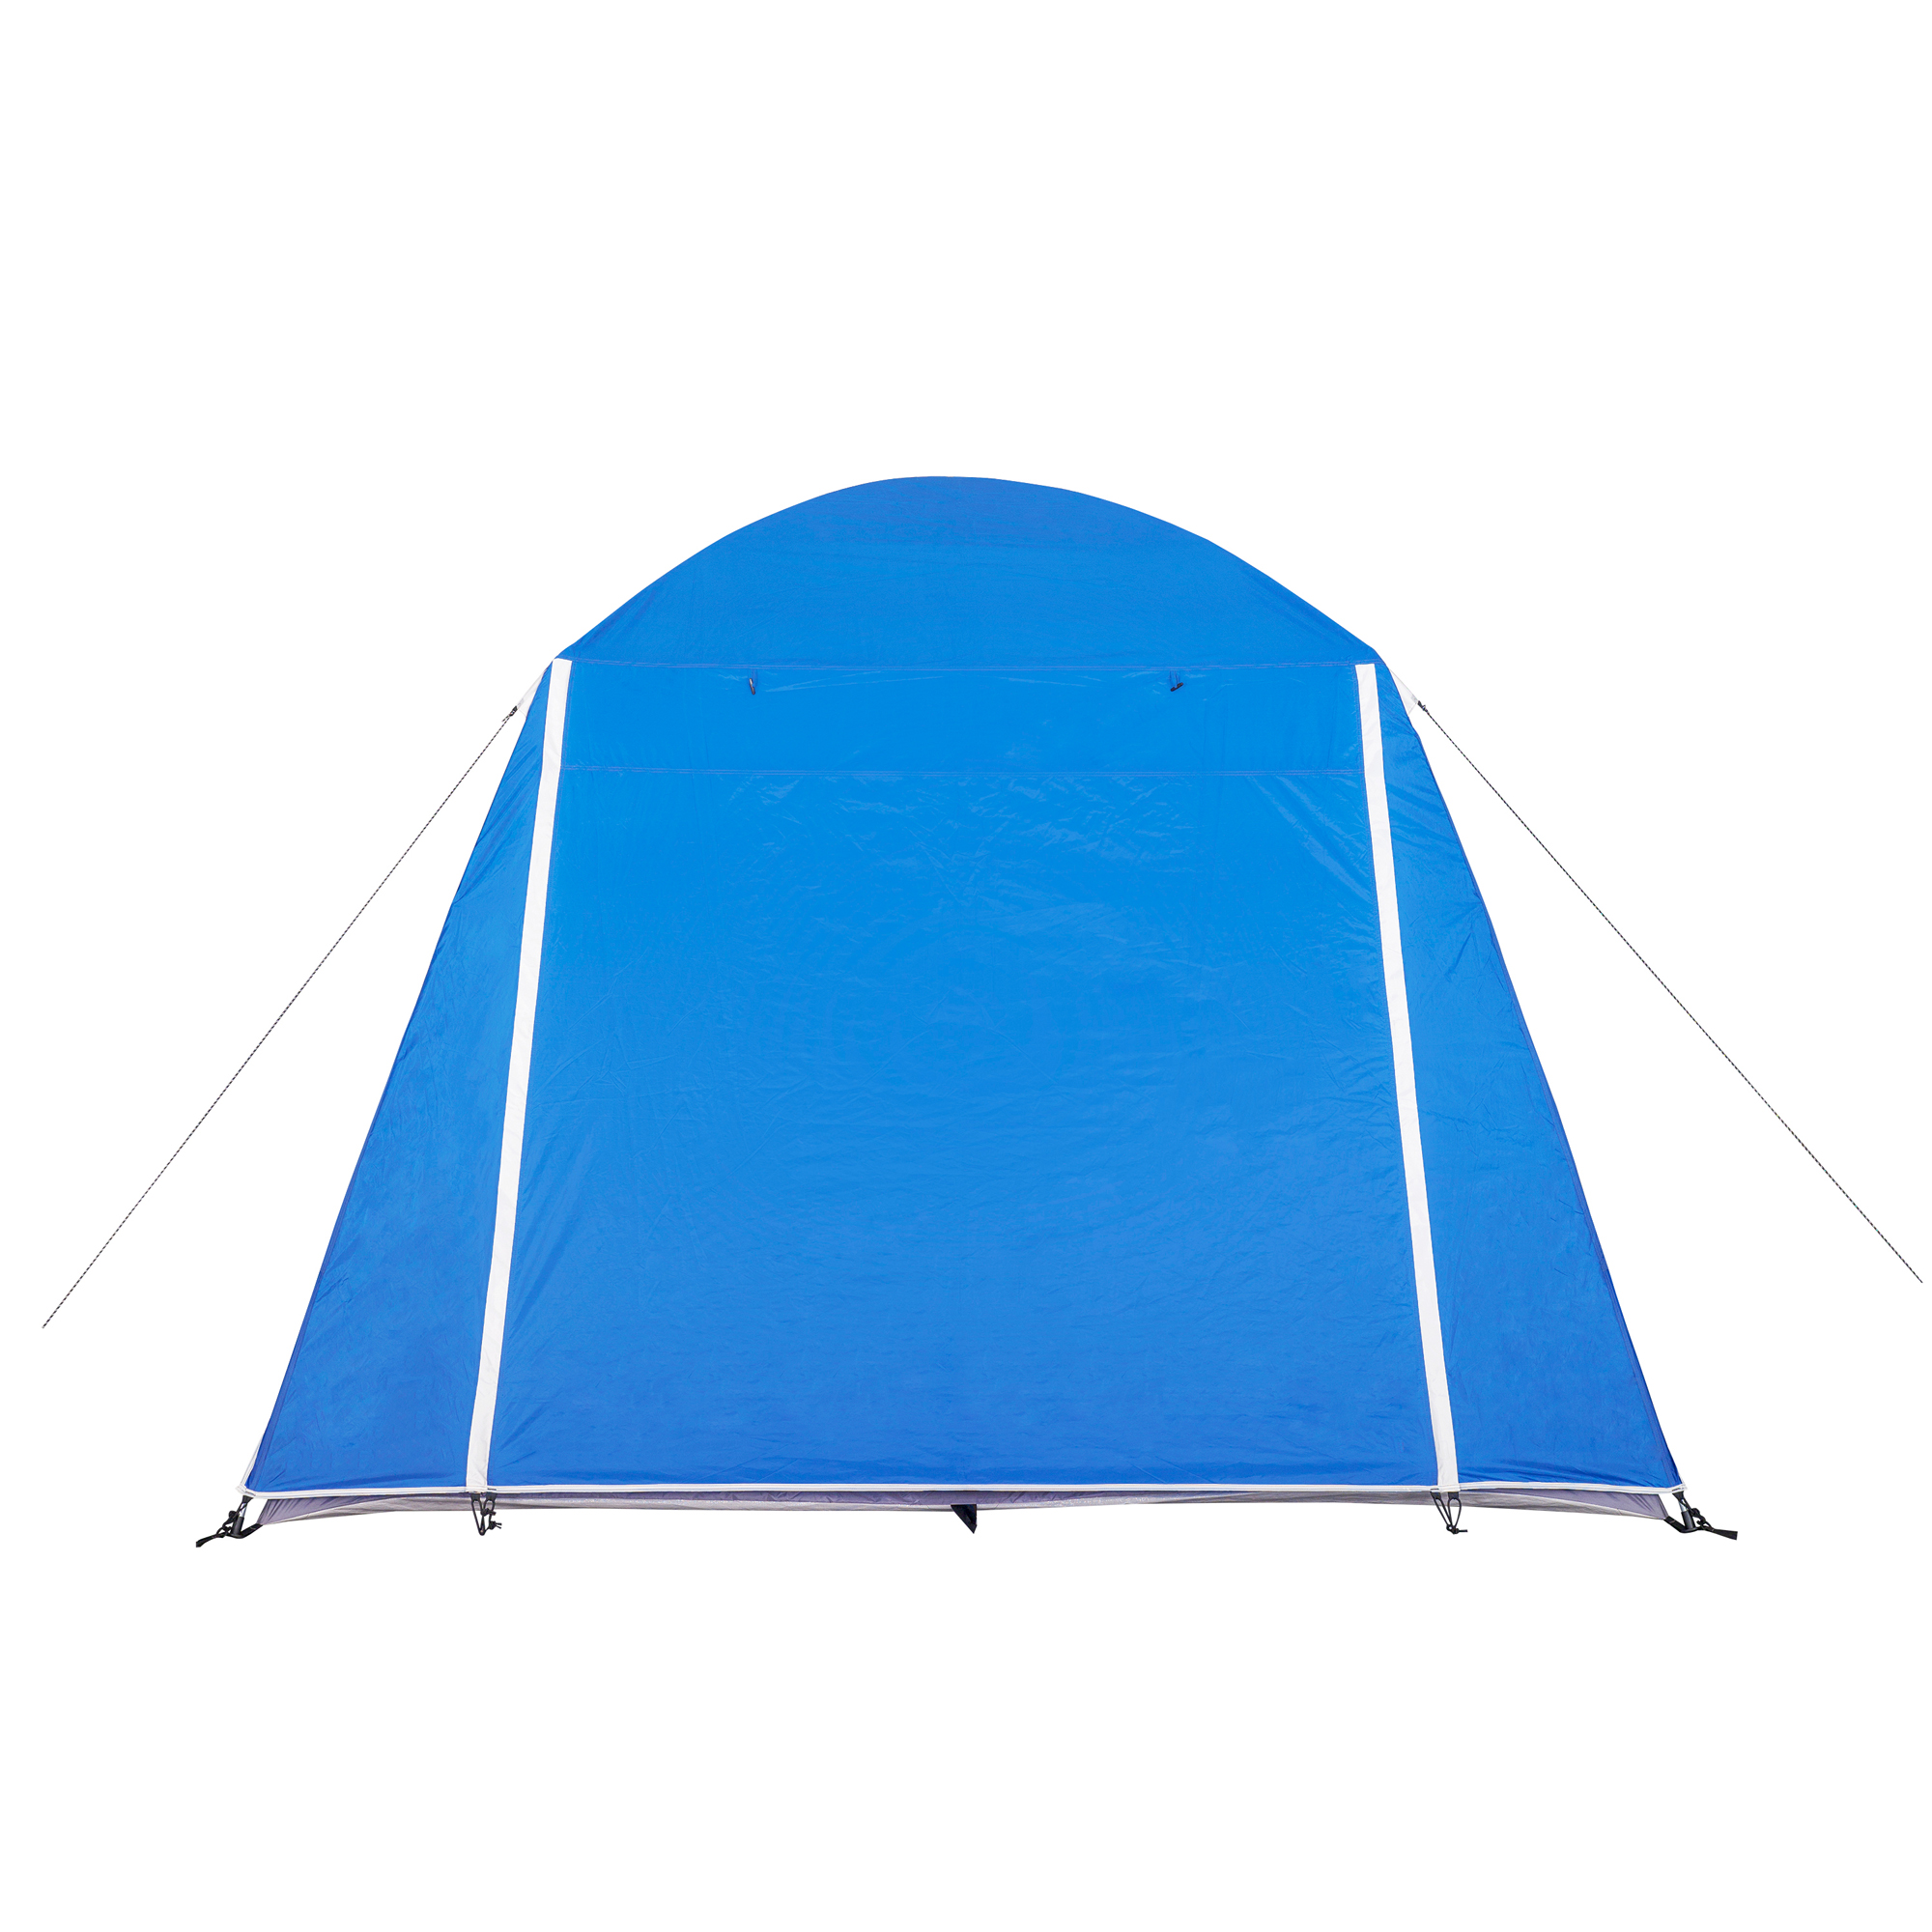 Ozark Trail 5-Person Dome Tent - image 2 of 10